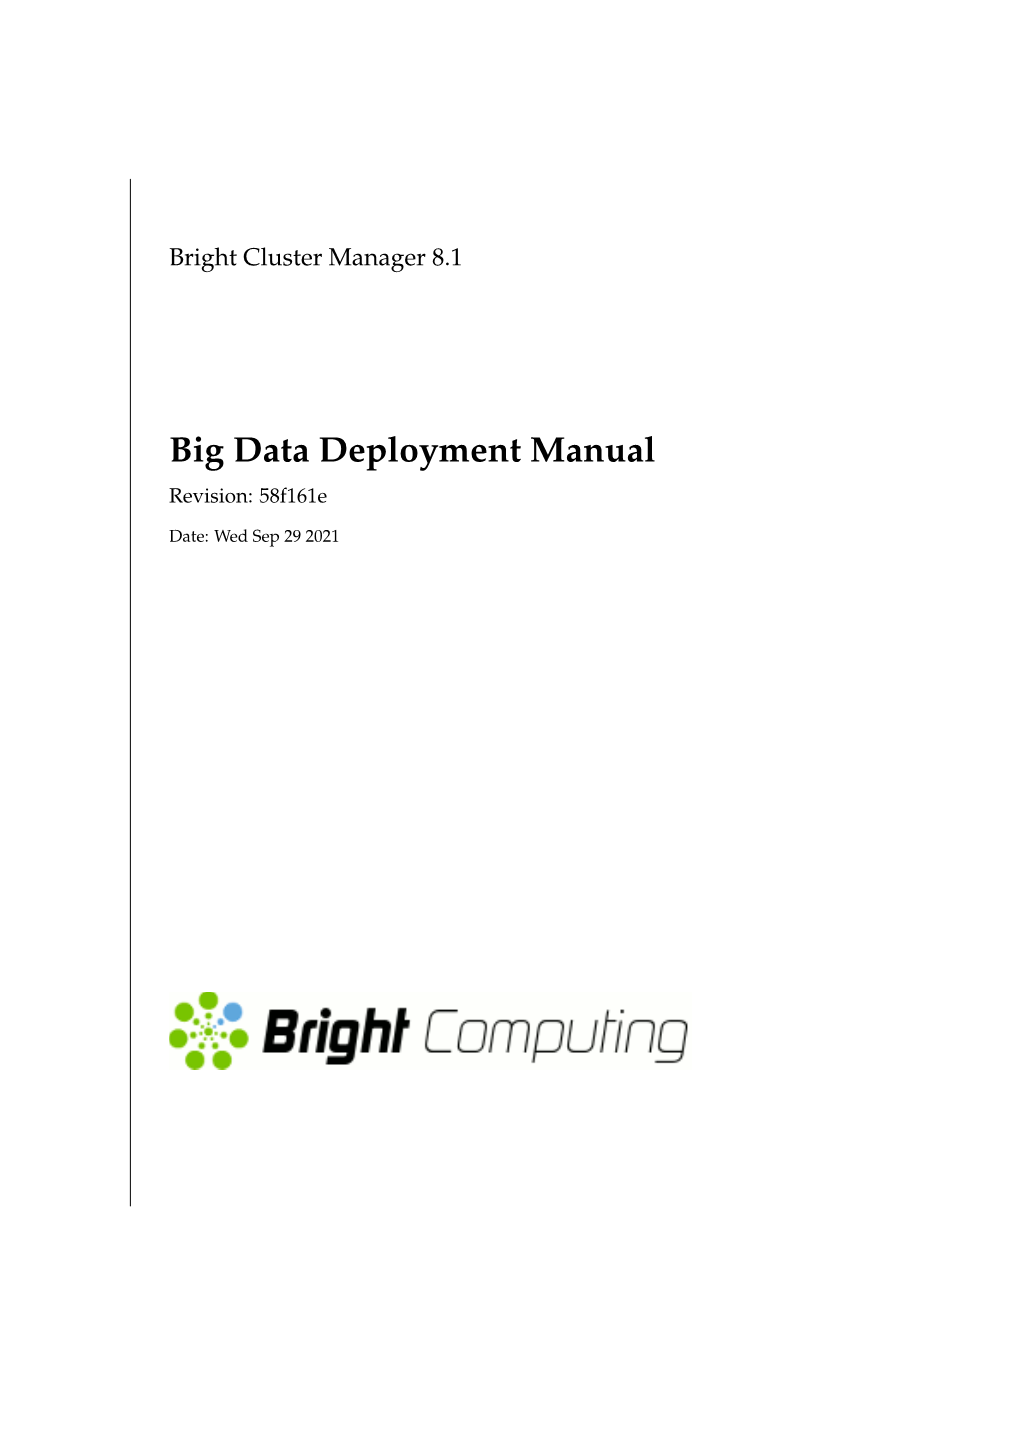 Big Data Deployment Manual Revision: 58F161e